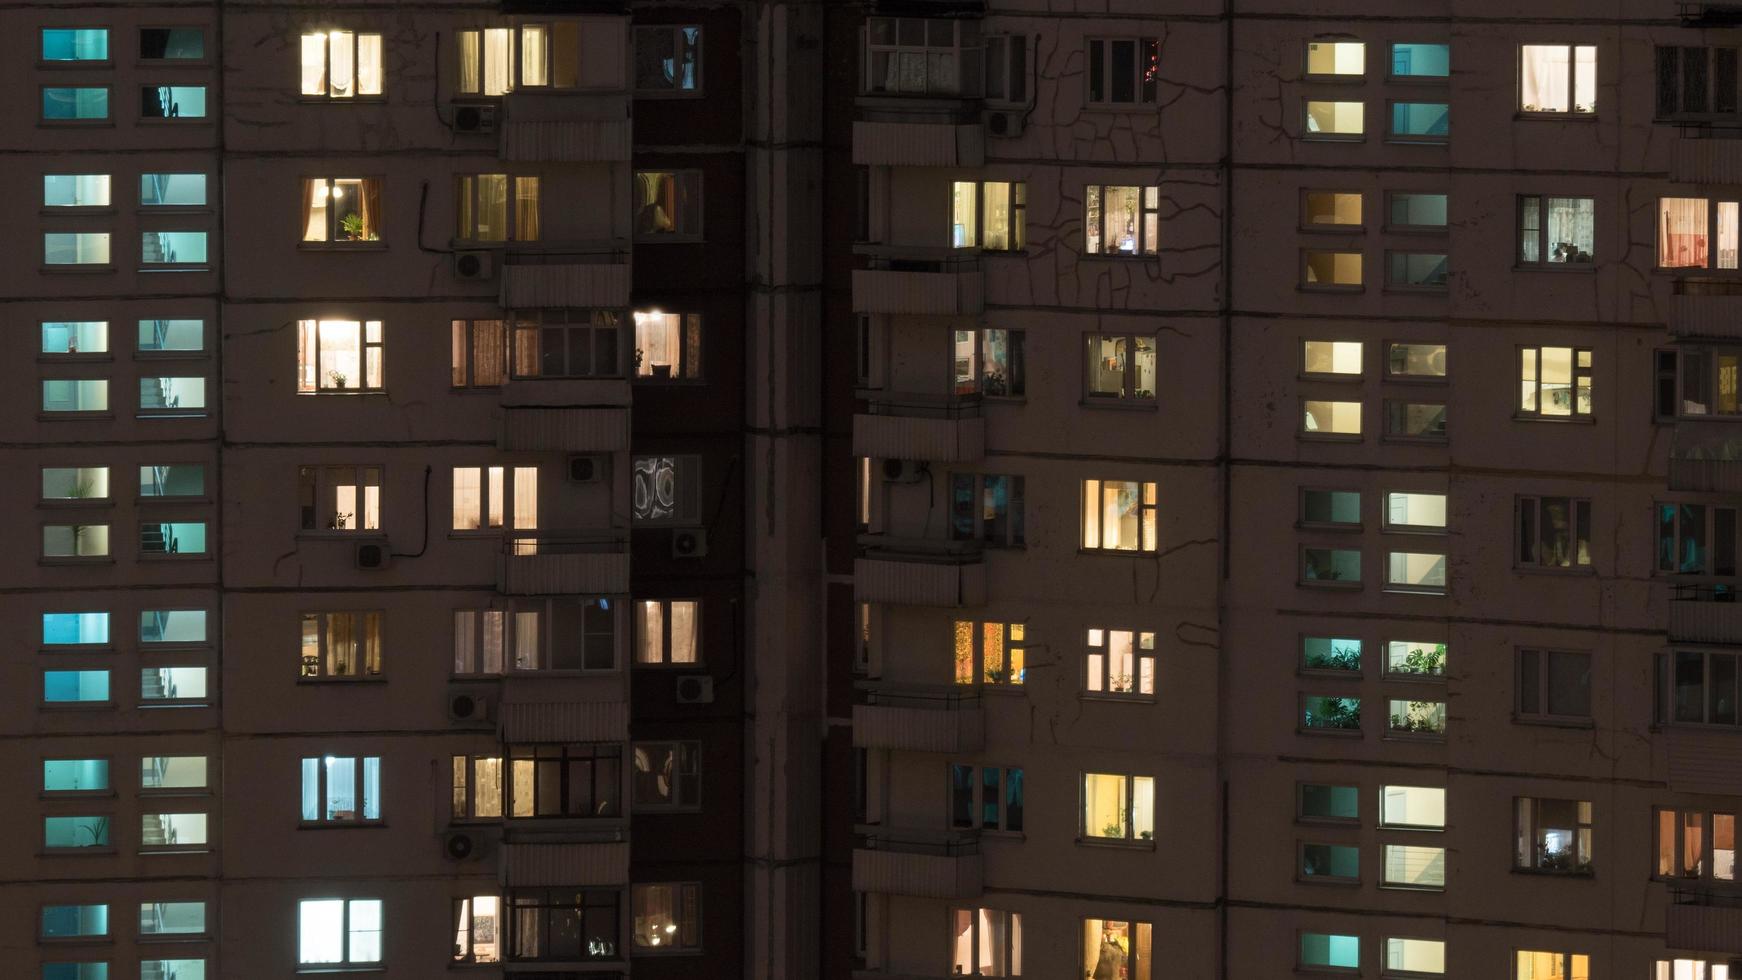 Moskou, Rusland, 2020 - Hoogbouwappartementen 's nachts foto